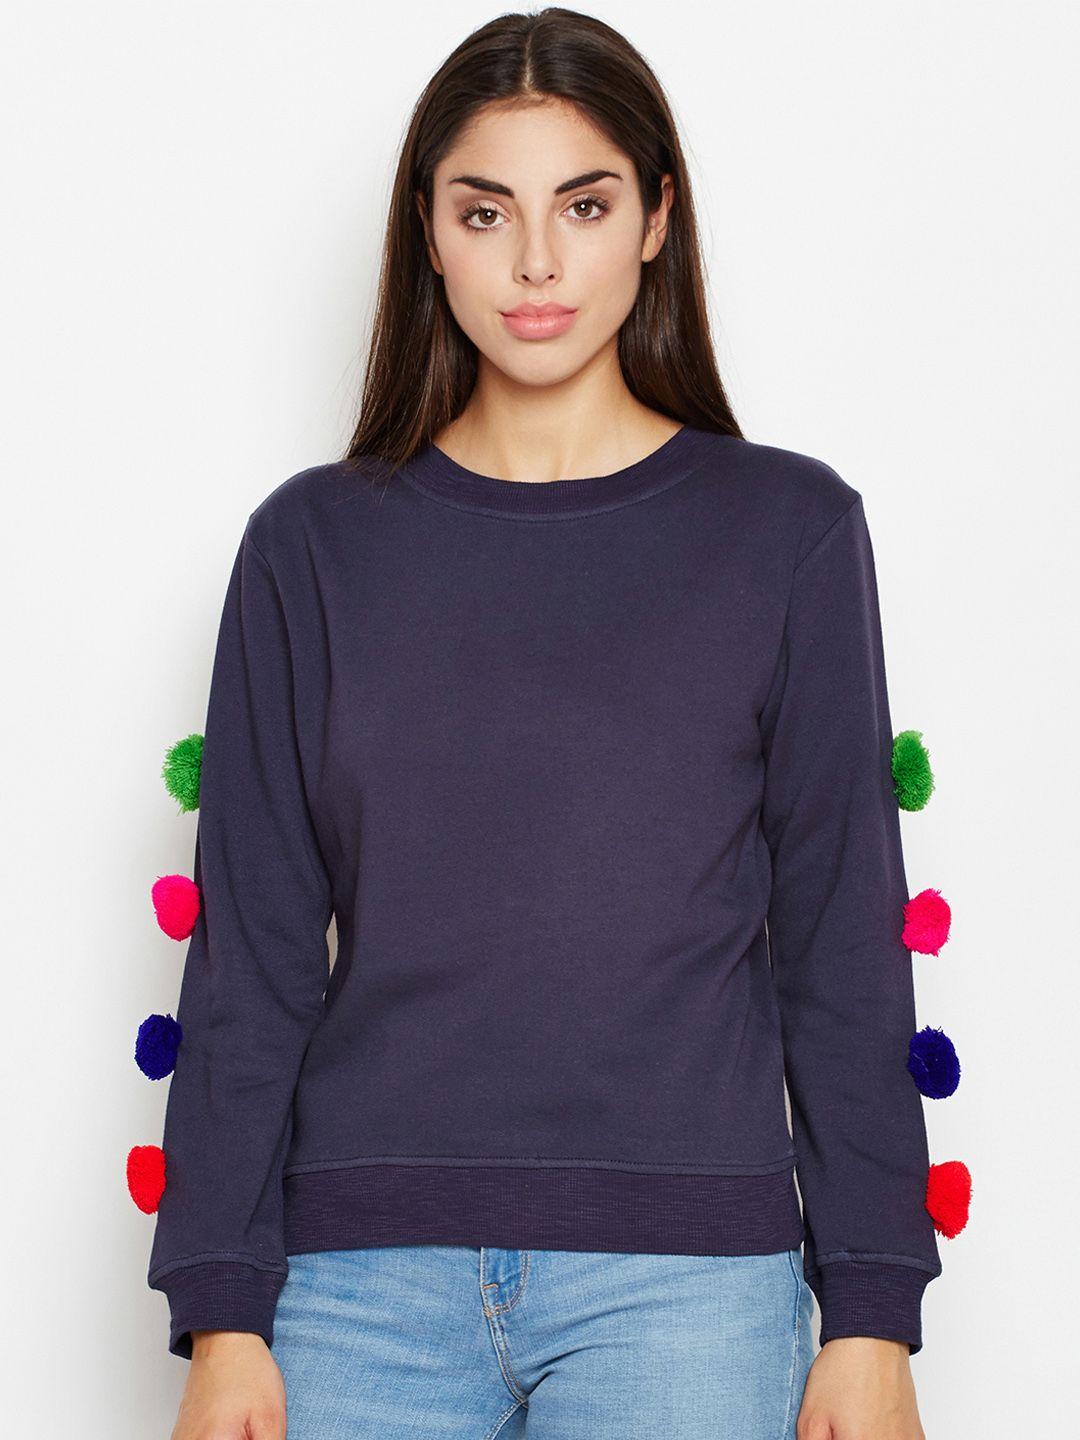 oxolloxo women navy blue solid sweatshirt